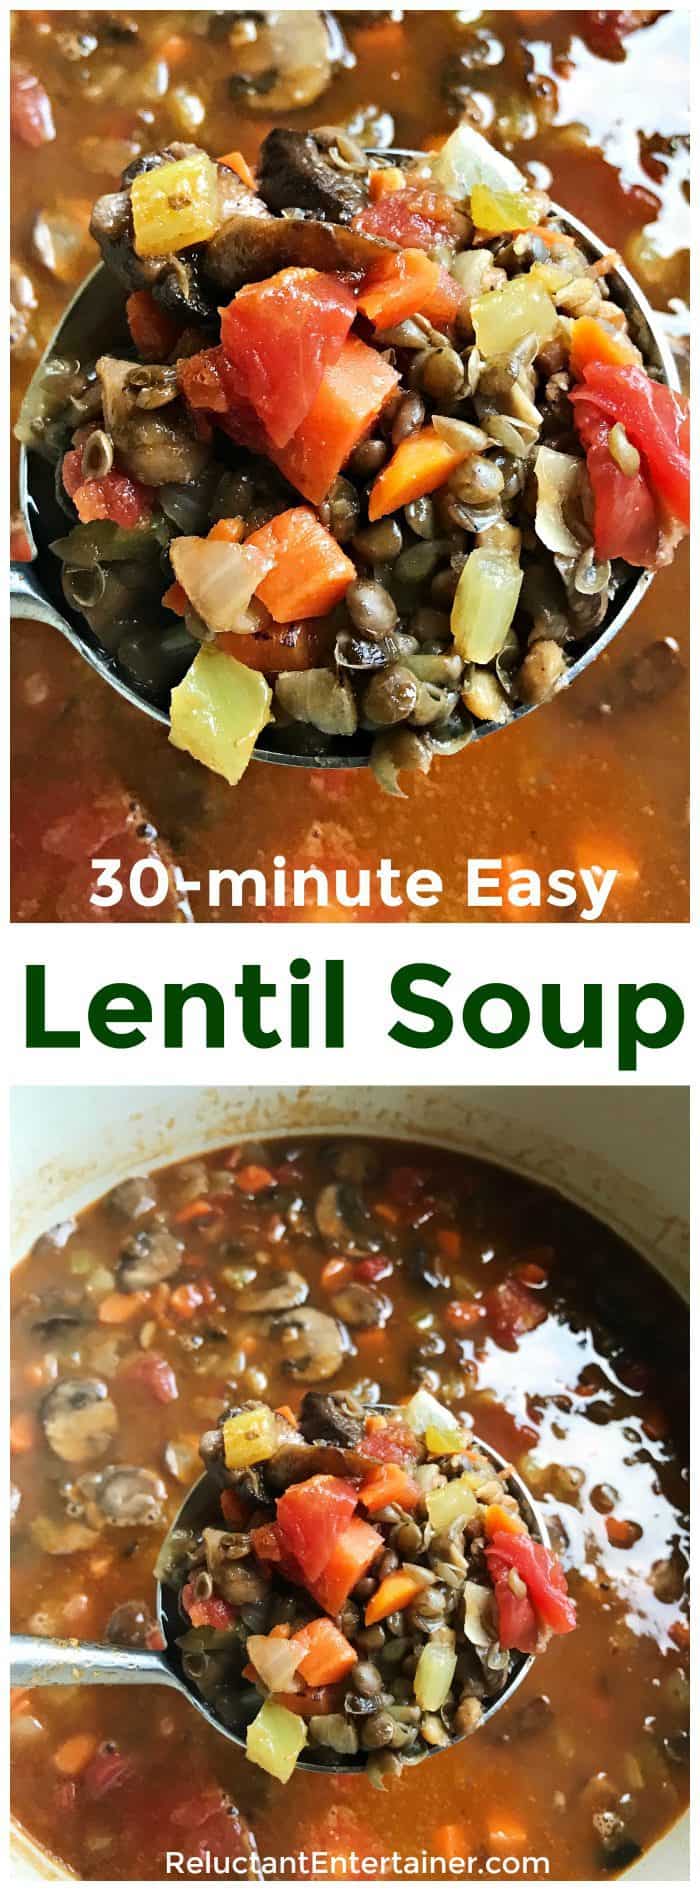 30-minute Easy Lentil Soup